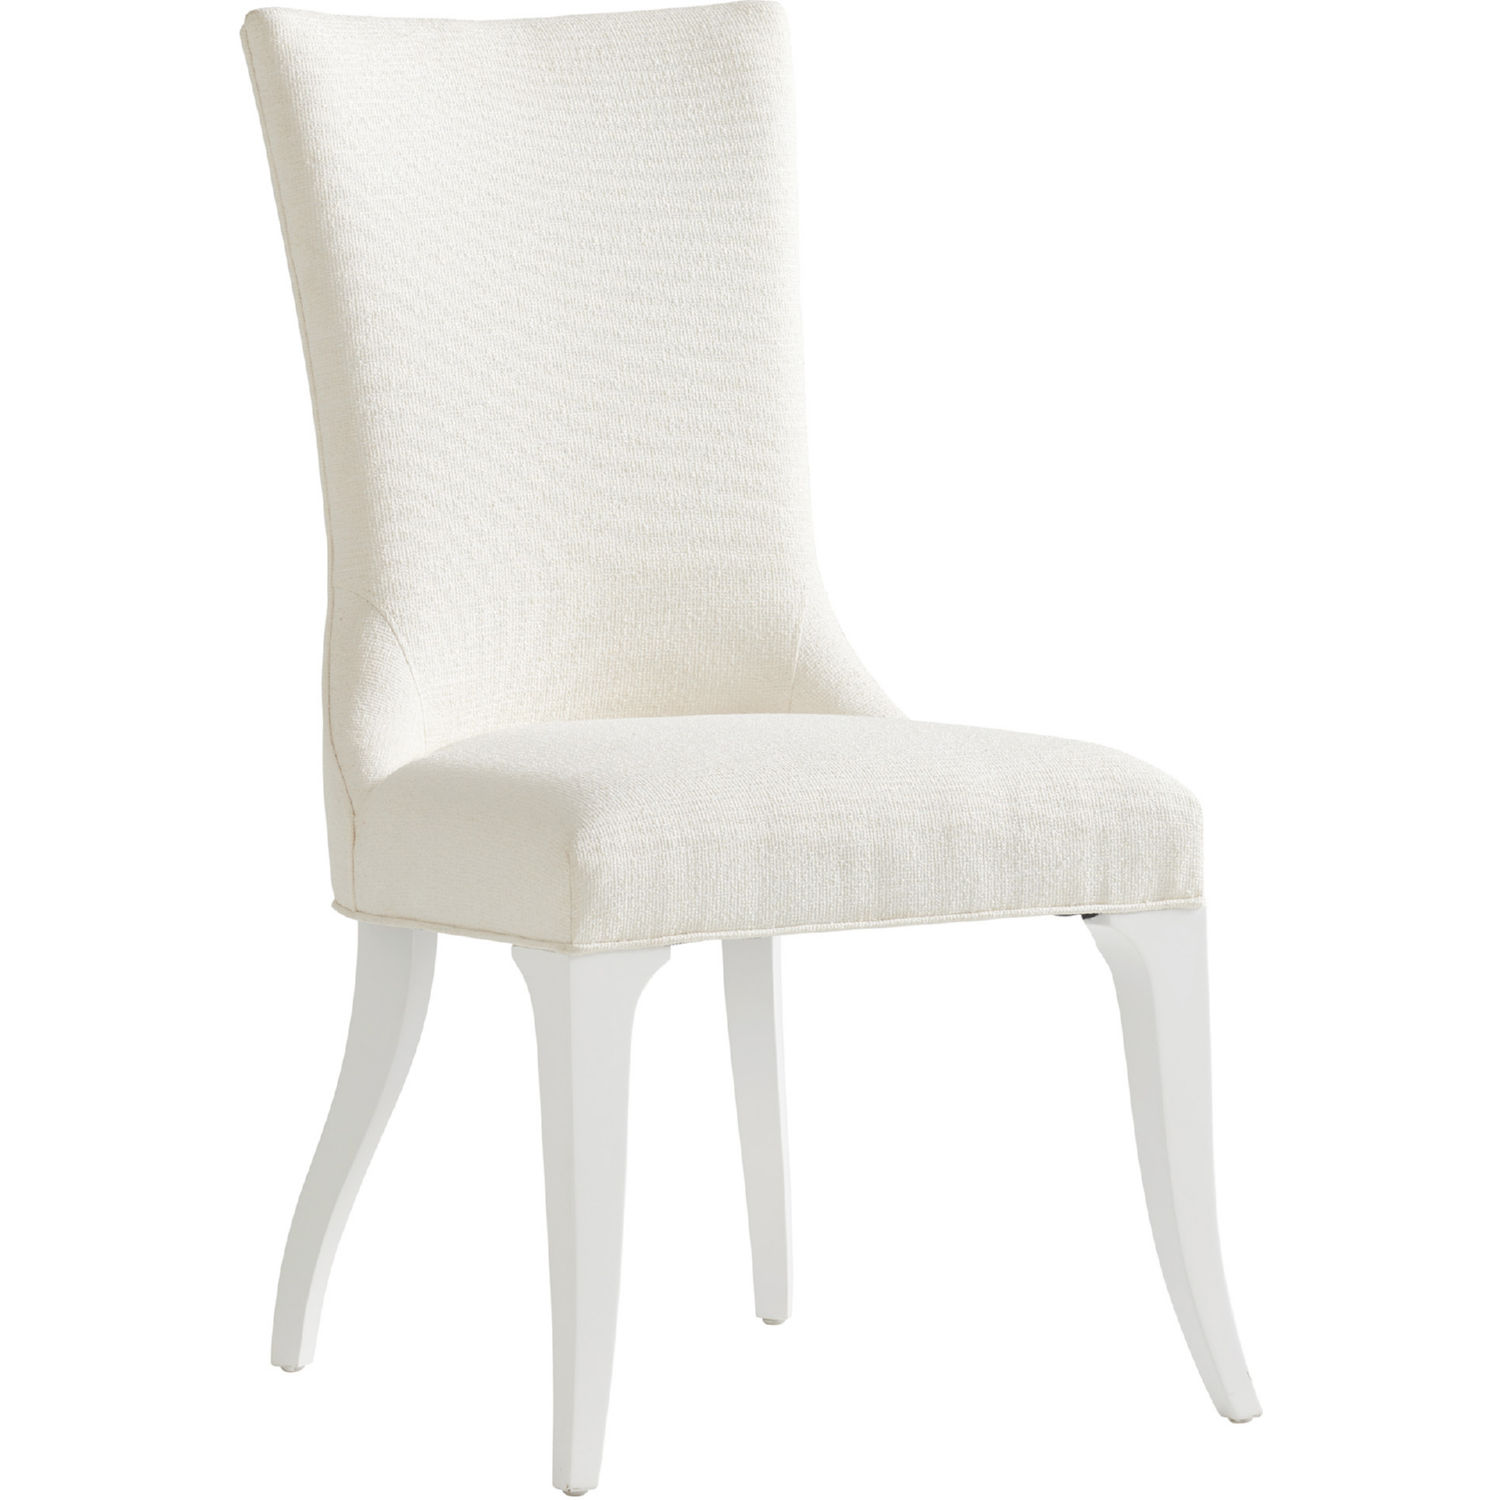 Lexington 01-0415-882-01 Geneva Dining Chair in White Fabric